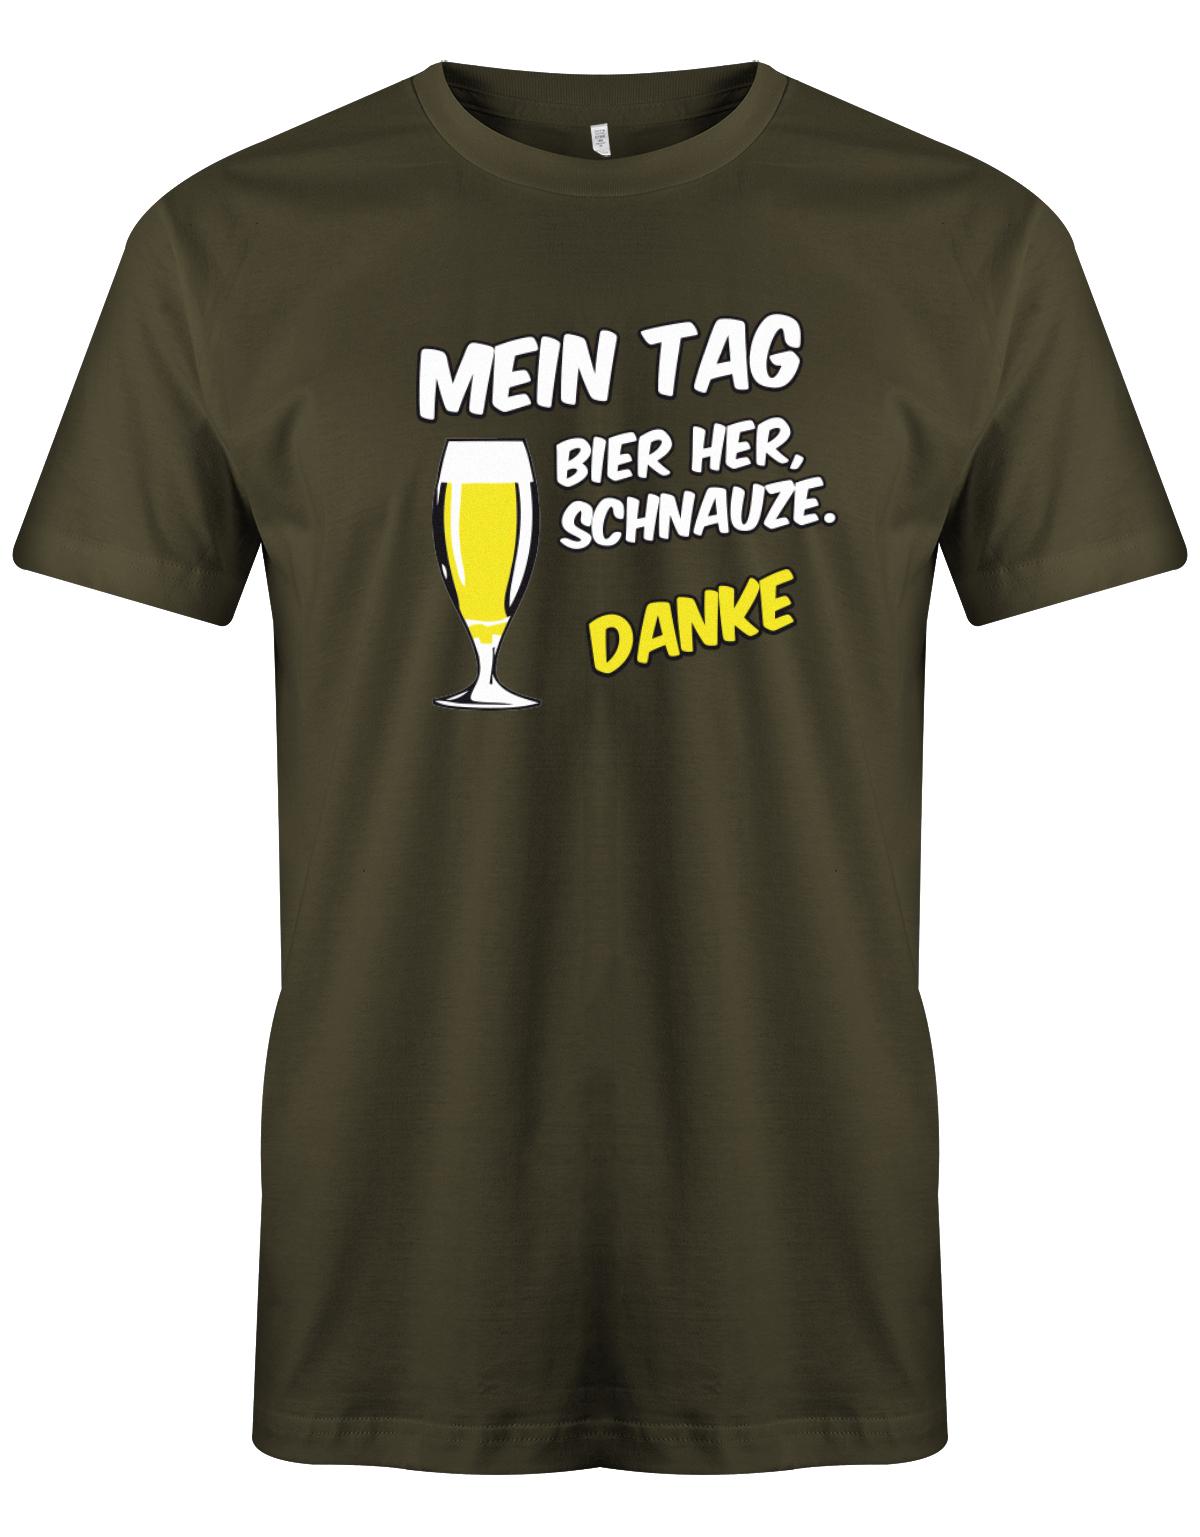 Mein-Tag-Bier-Her-Schnauze-Danke-Vatertag-Herren-Shirt-Army